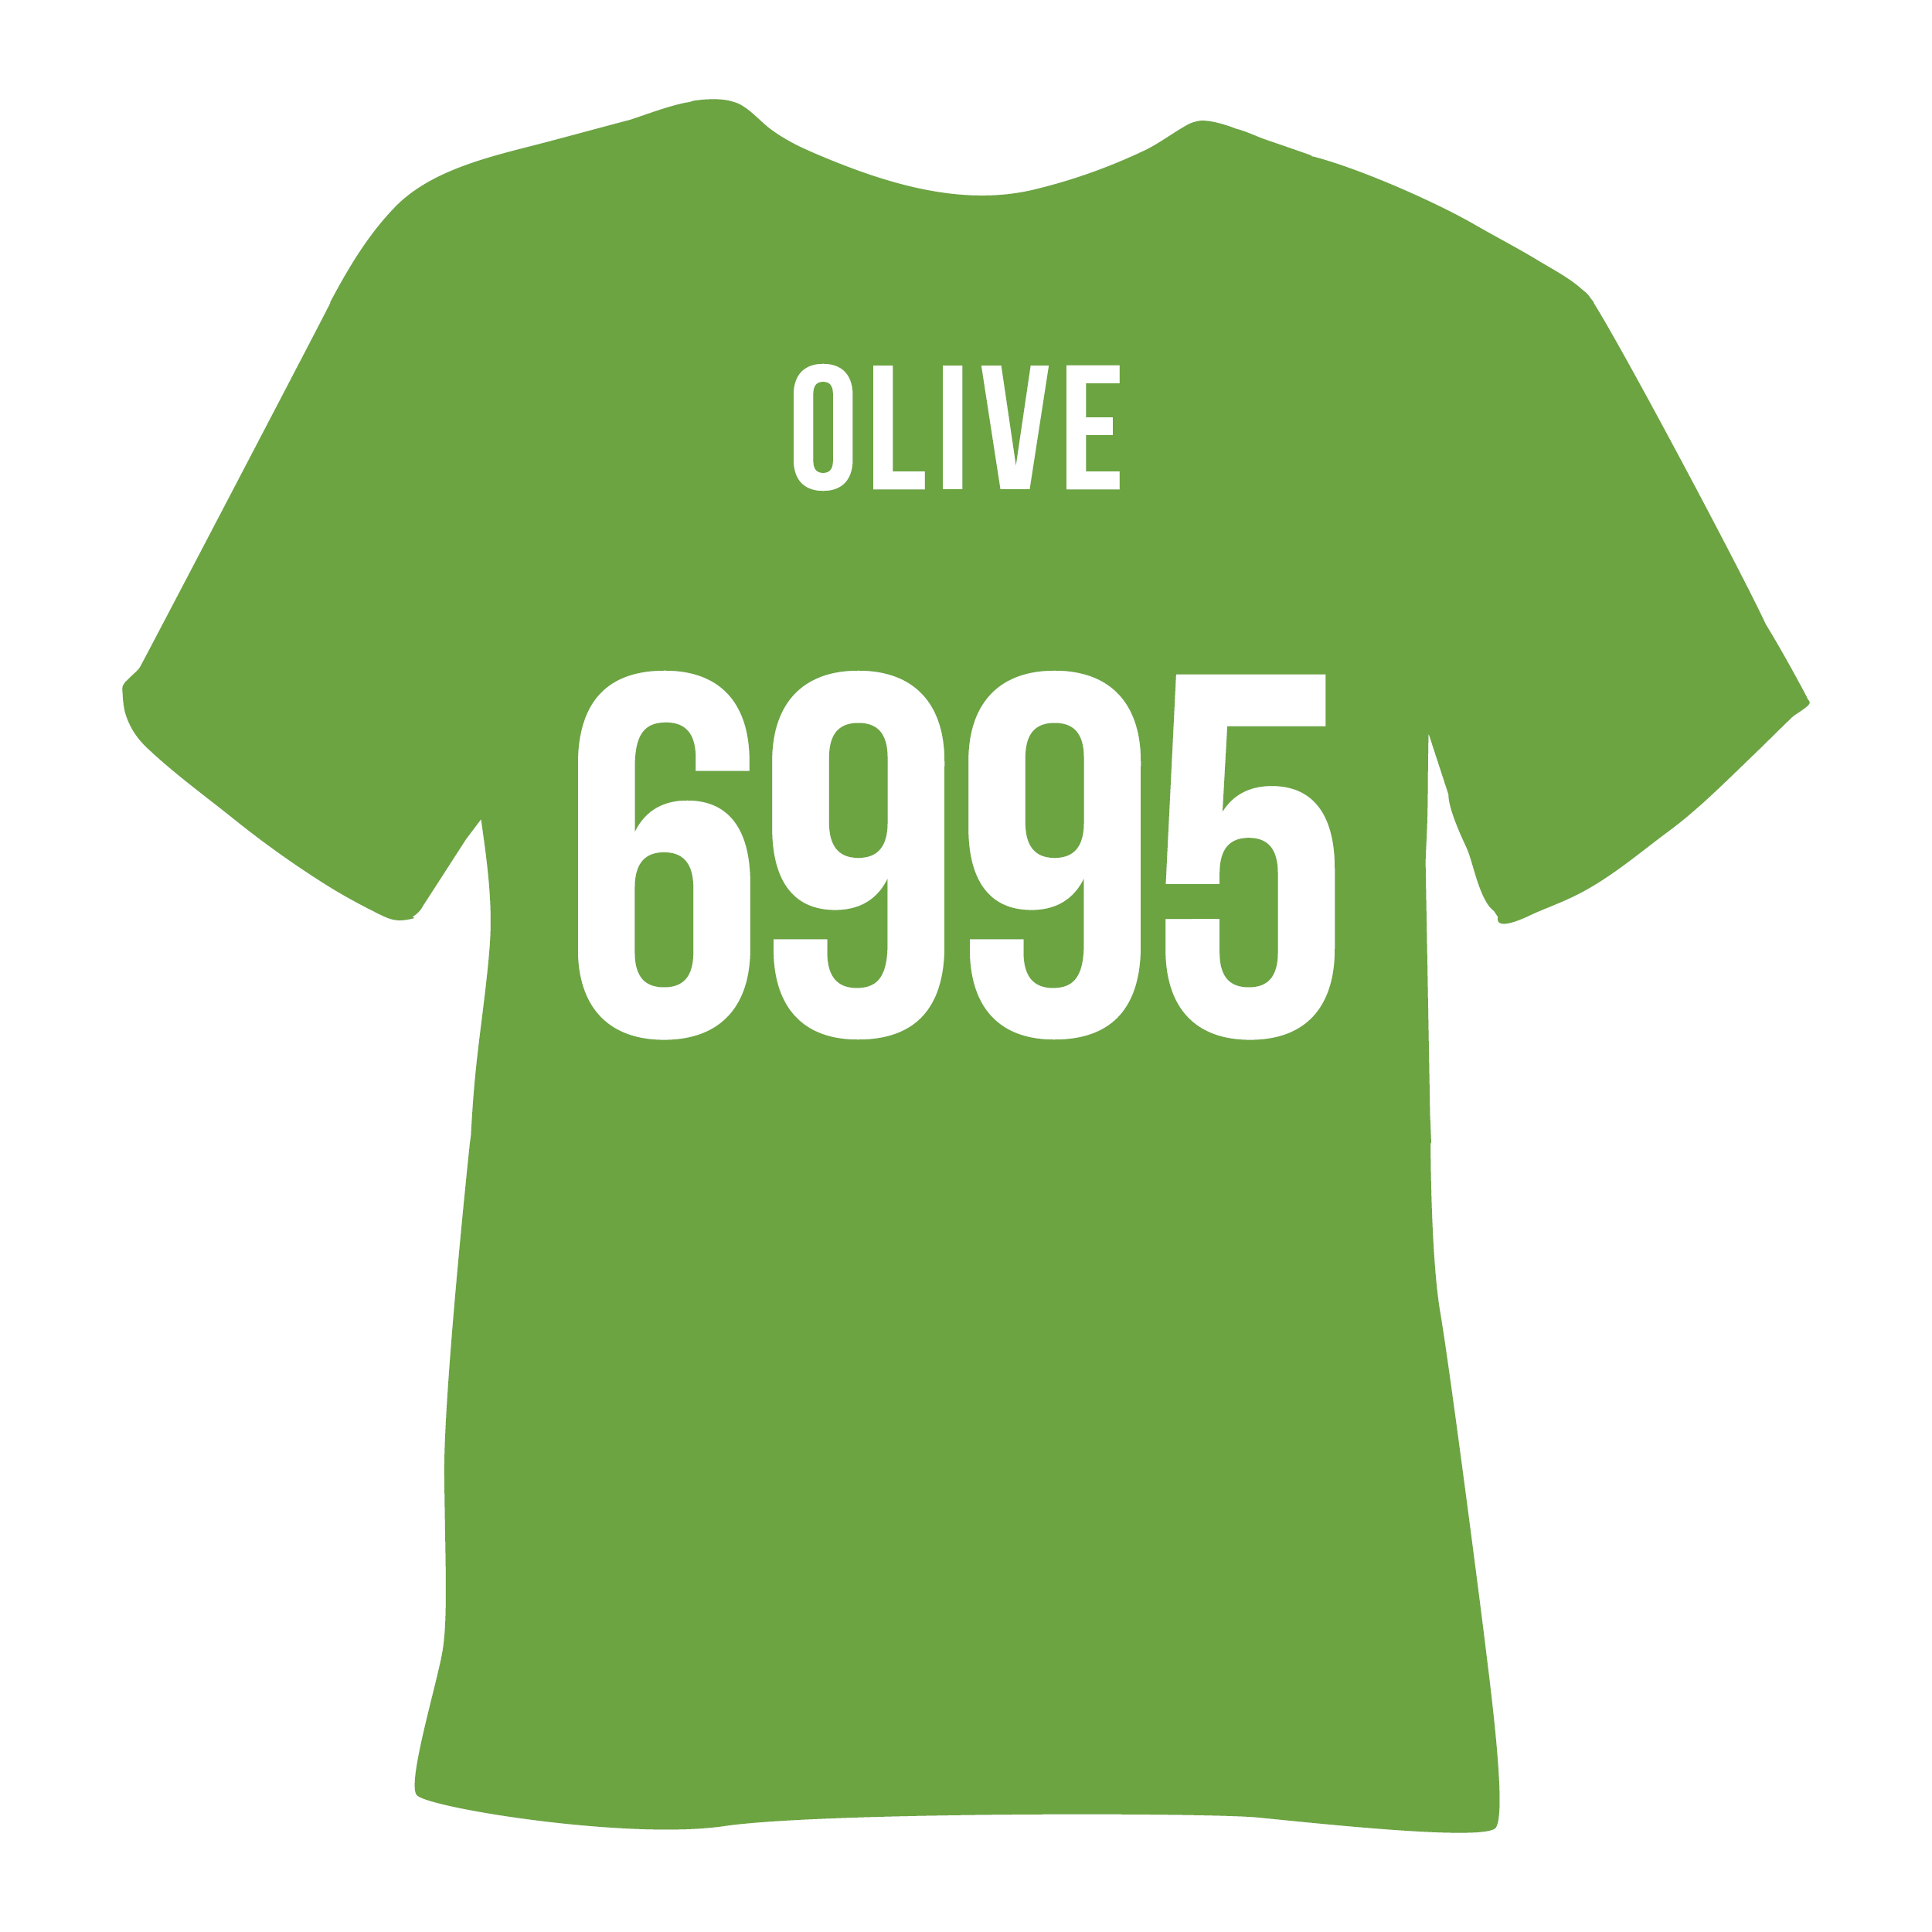 6995 OLIVE